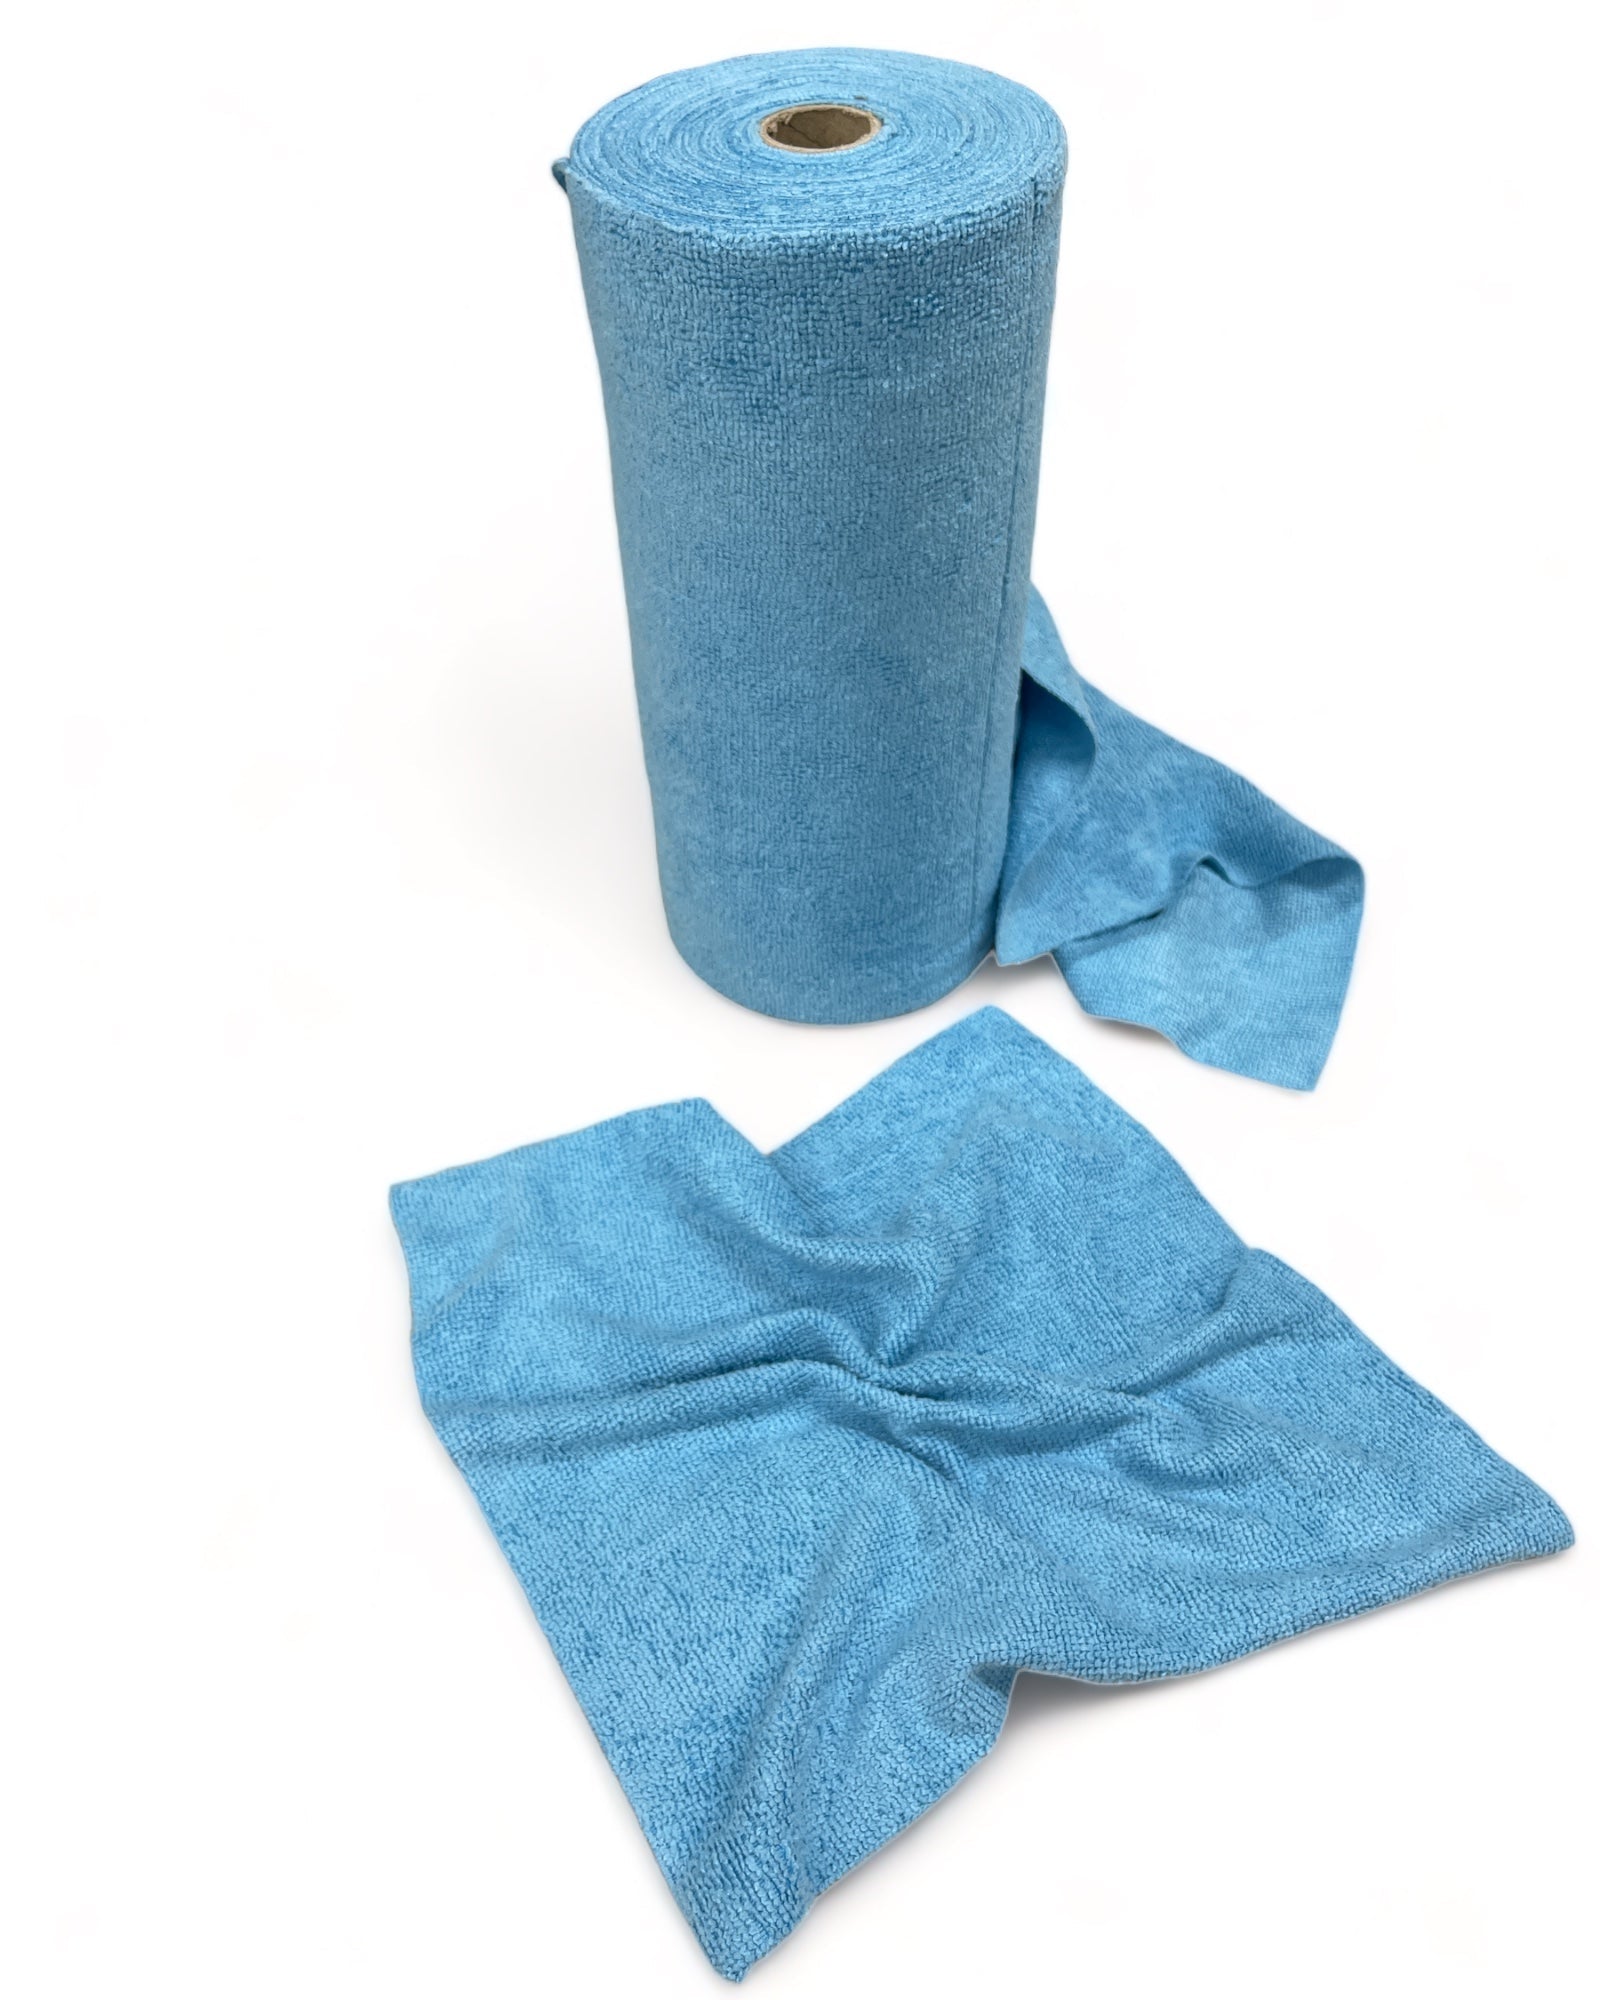 Blue microfiber shop towel